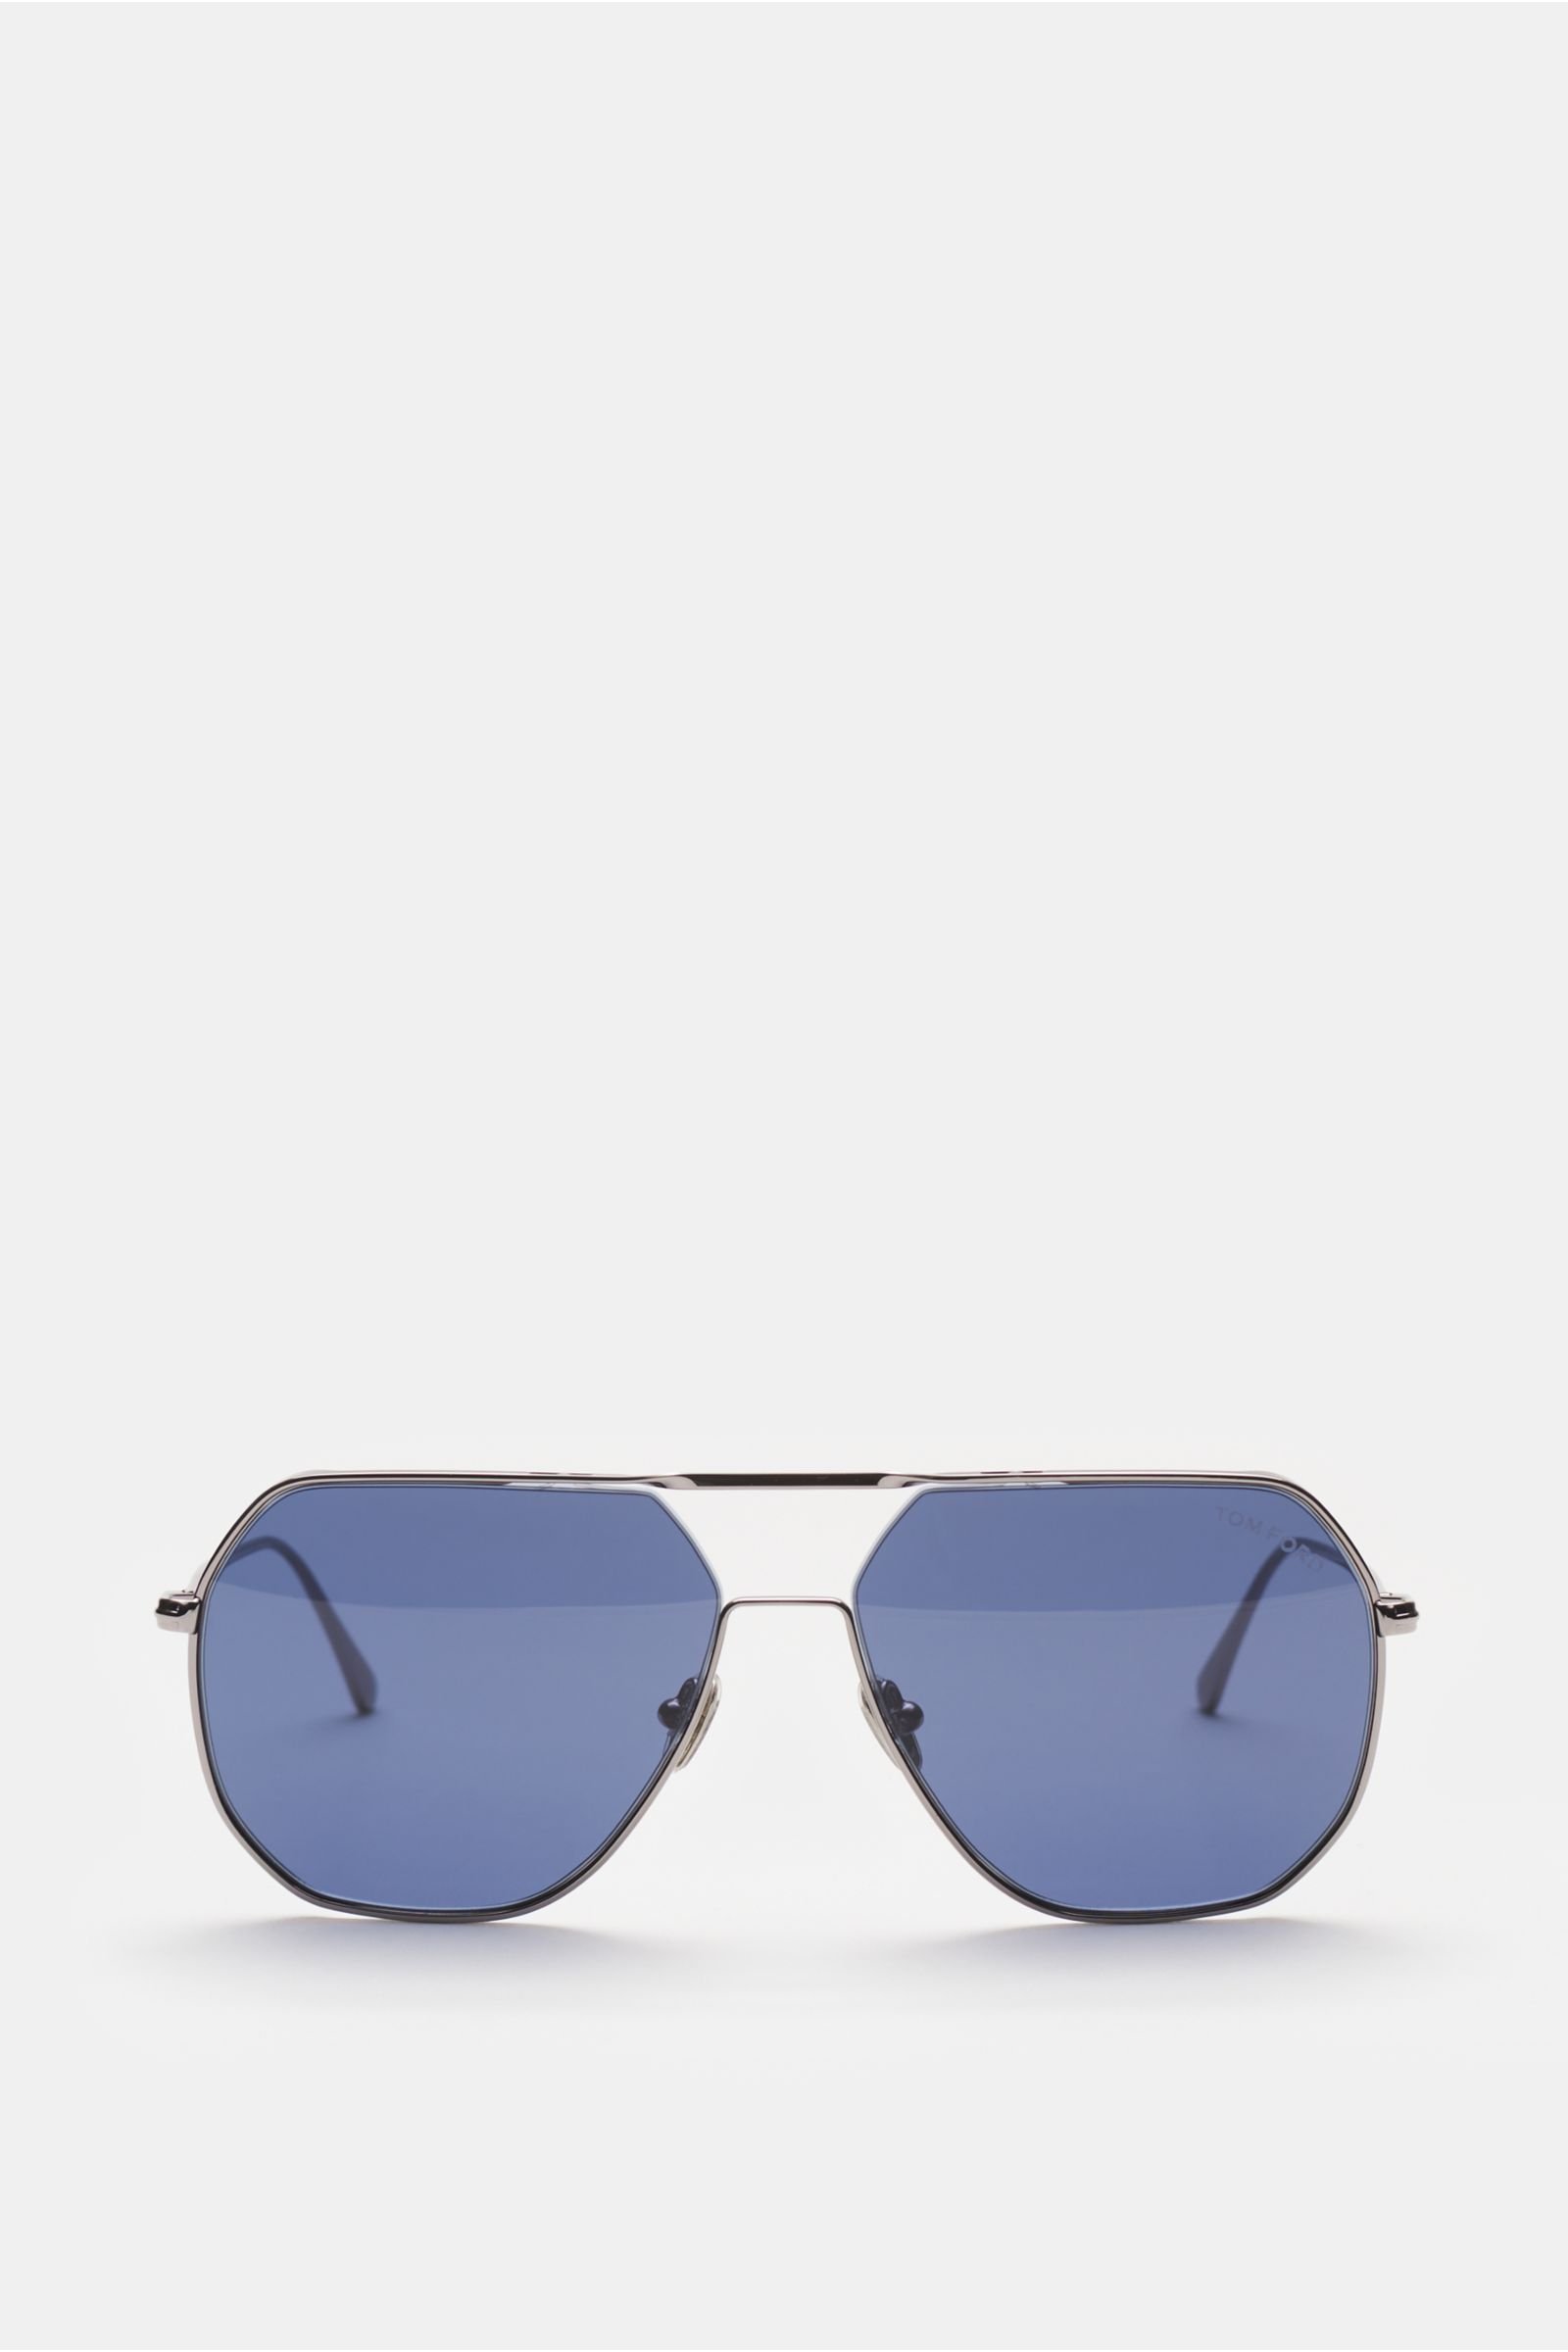 Sunglasses 'Gilles' silver/dark blue